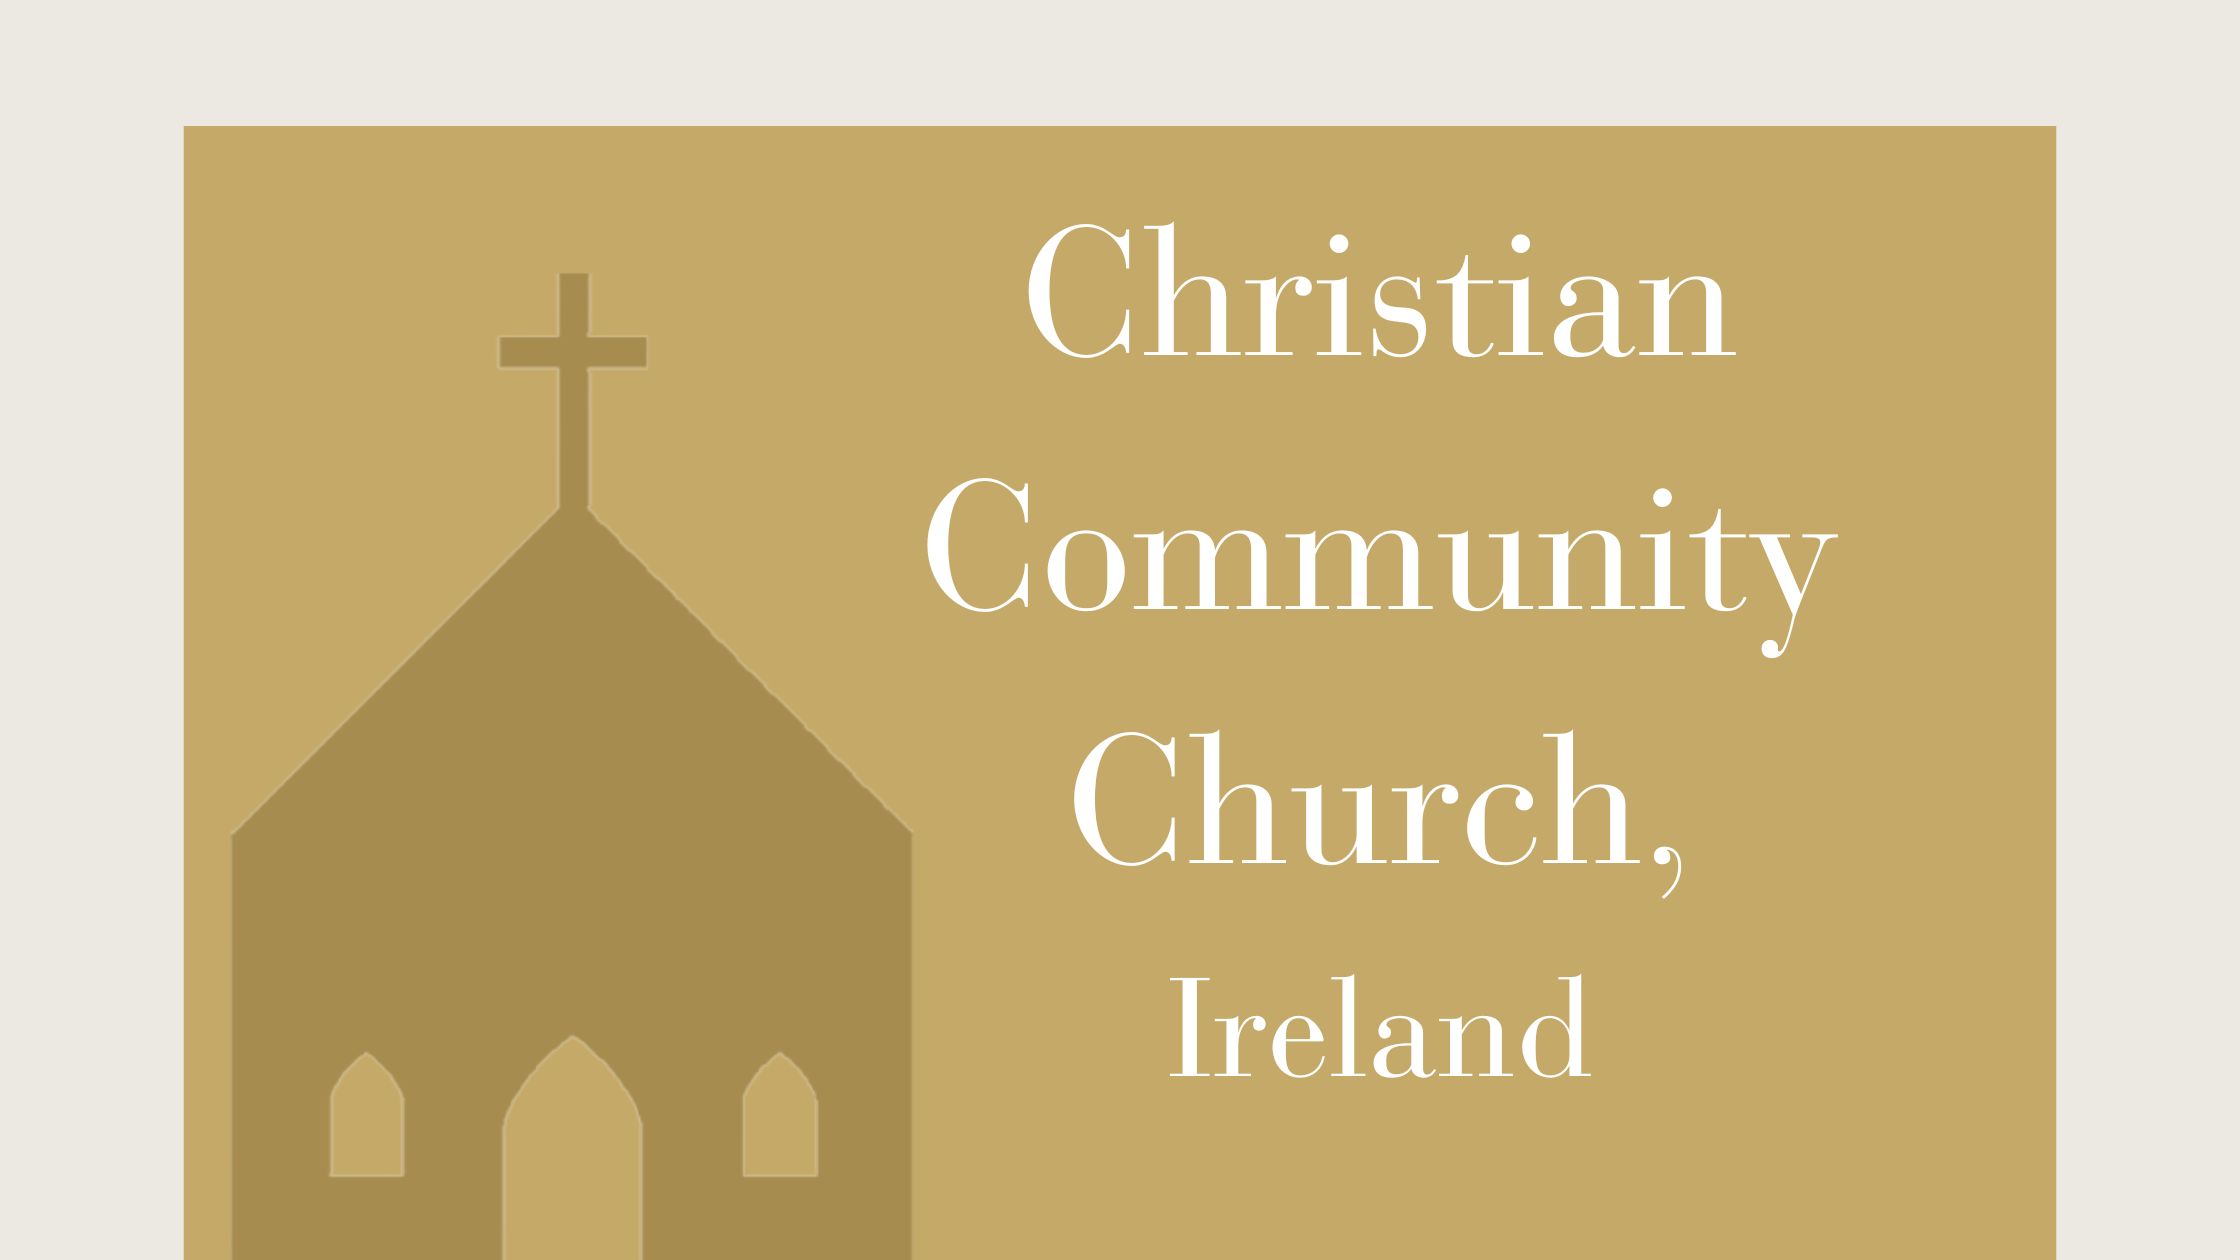 Christian Community Church, Ireland